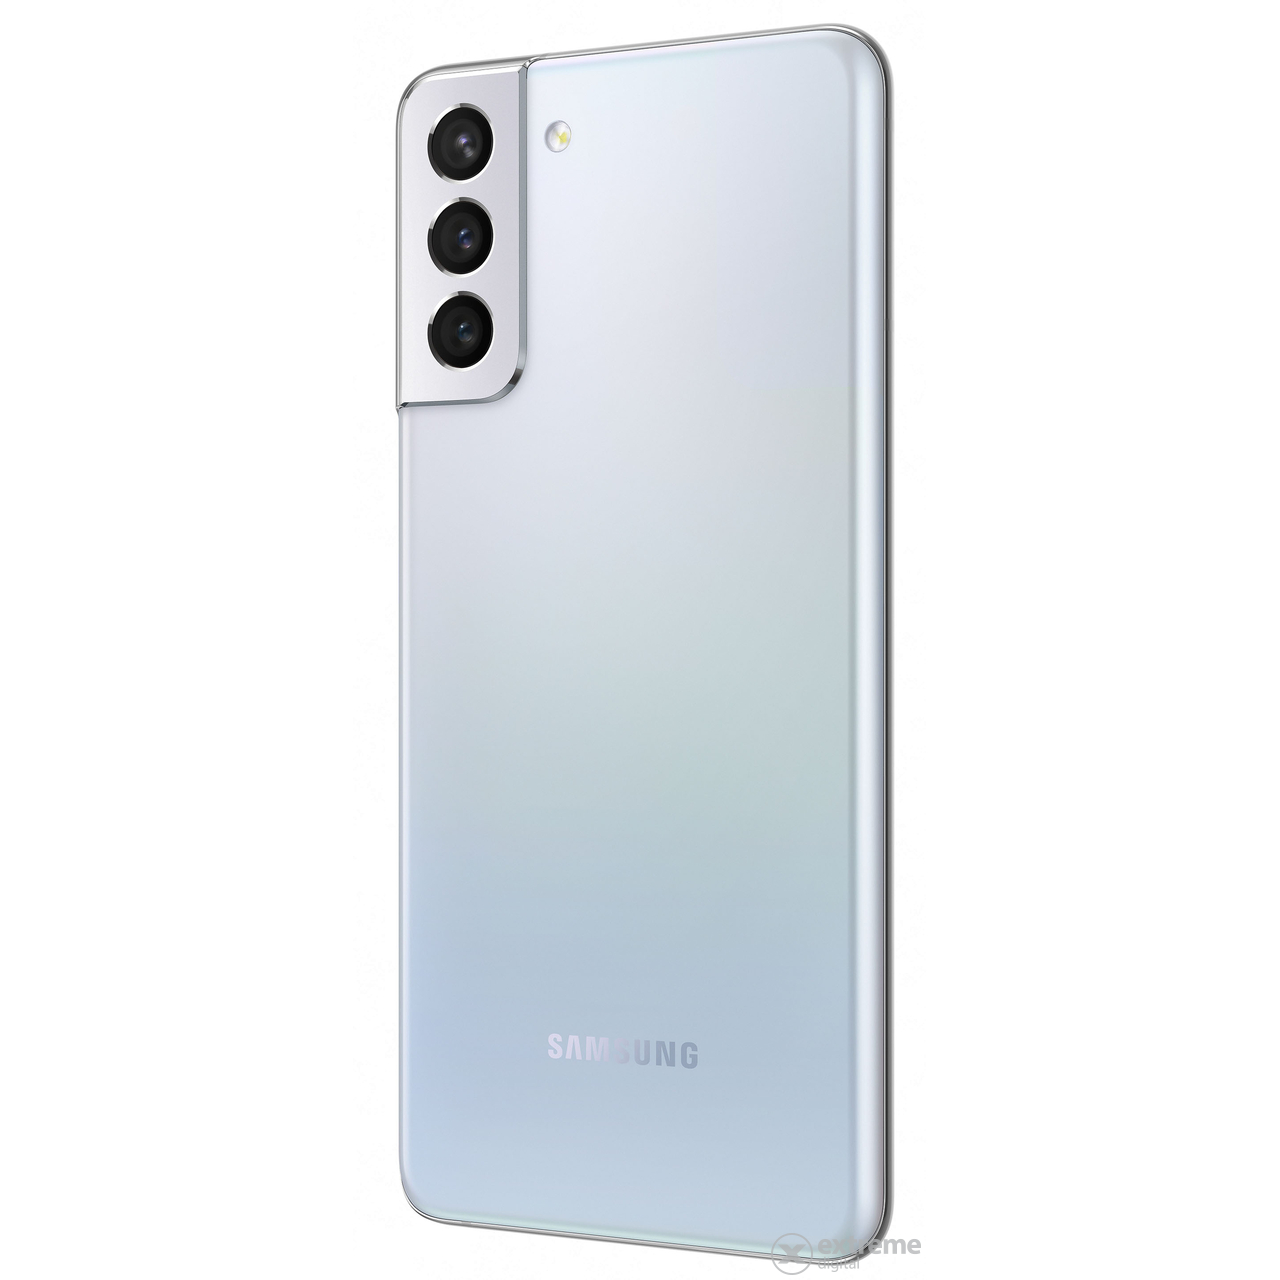 Samsung Galaxy S21+ 5G 8GB/128GB Dual SIM (SM-G996) pametni telefon, Fantom srebrna